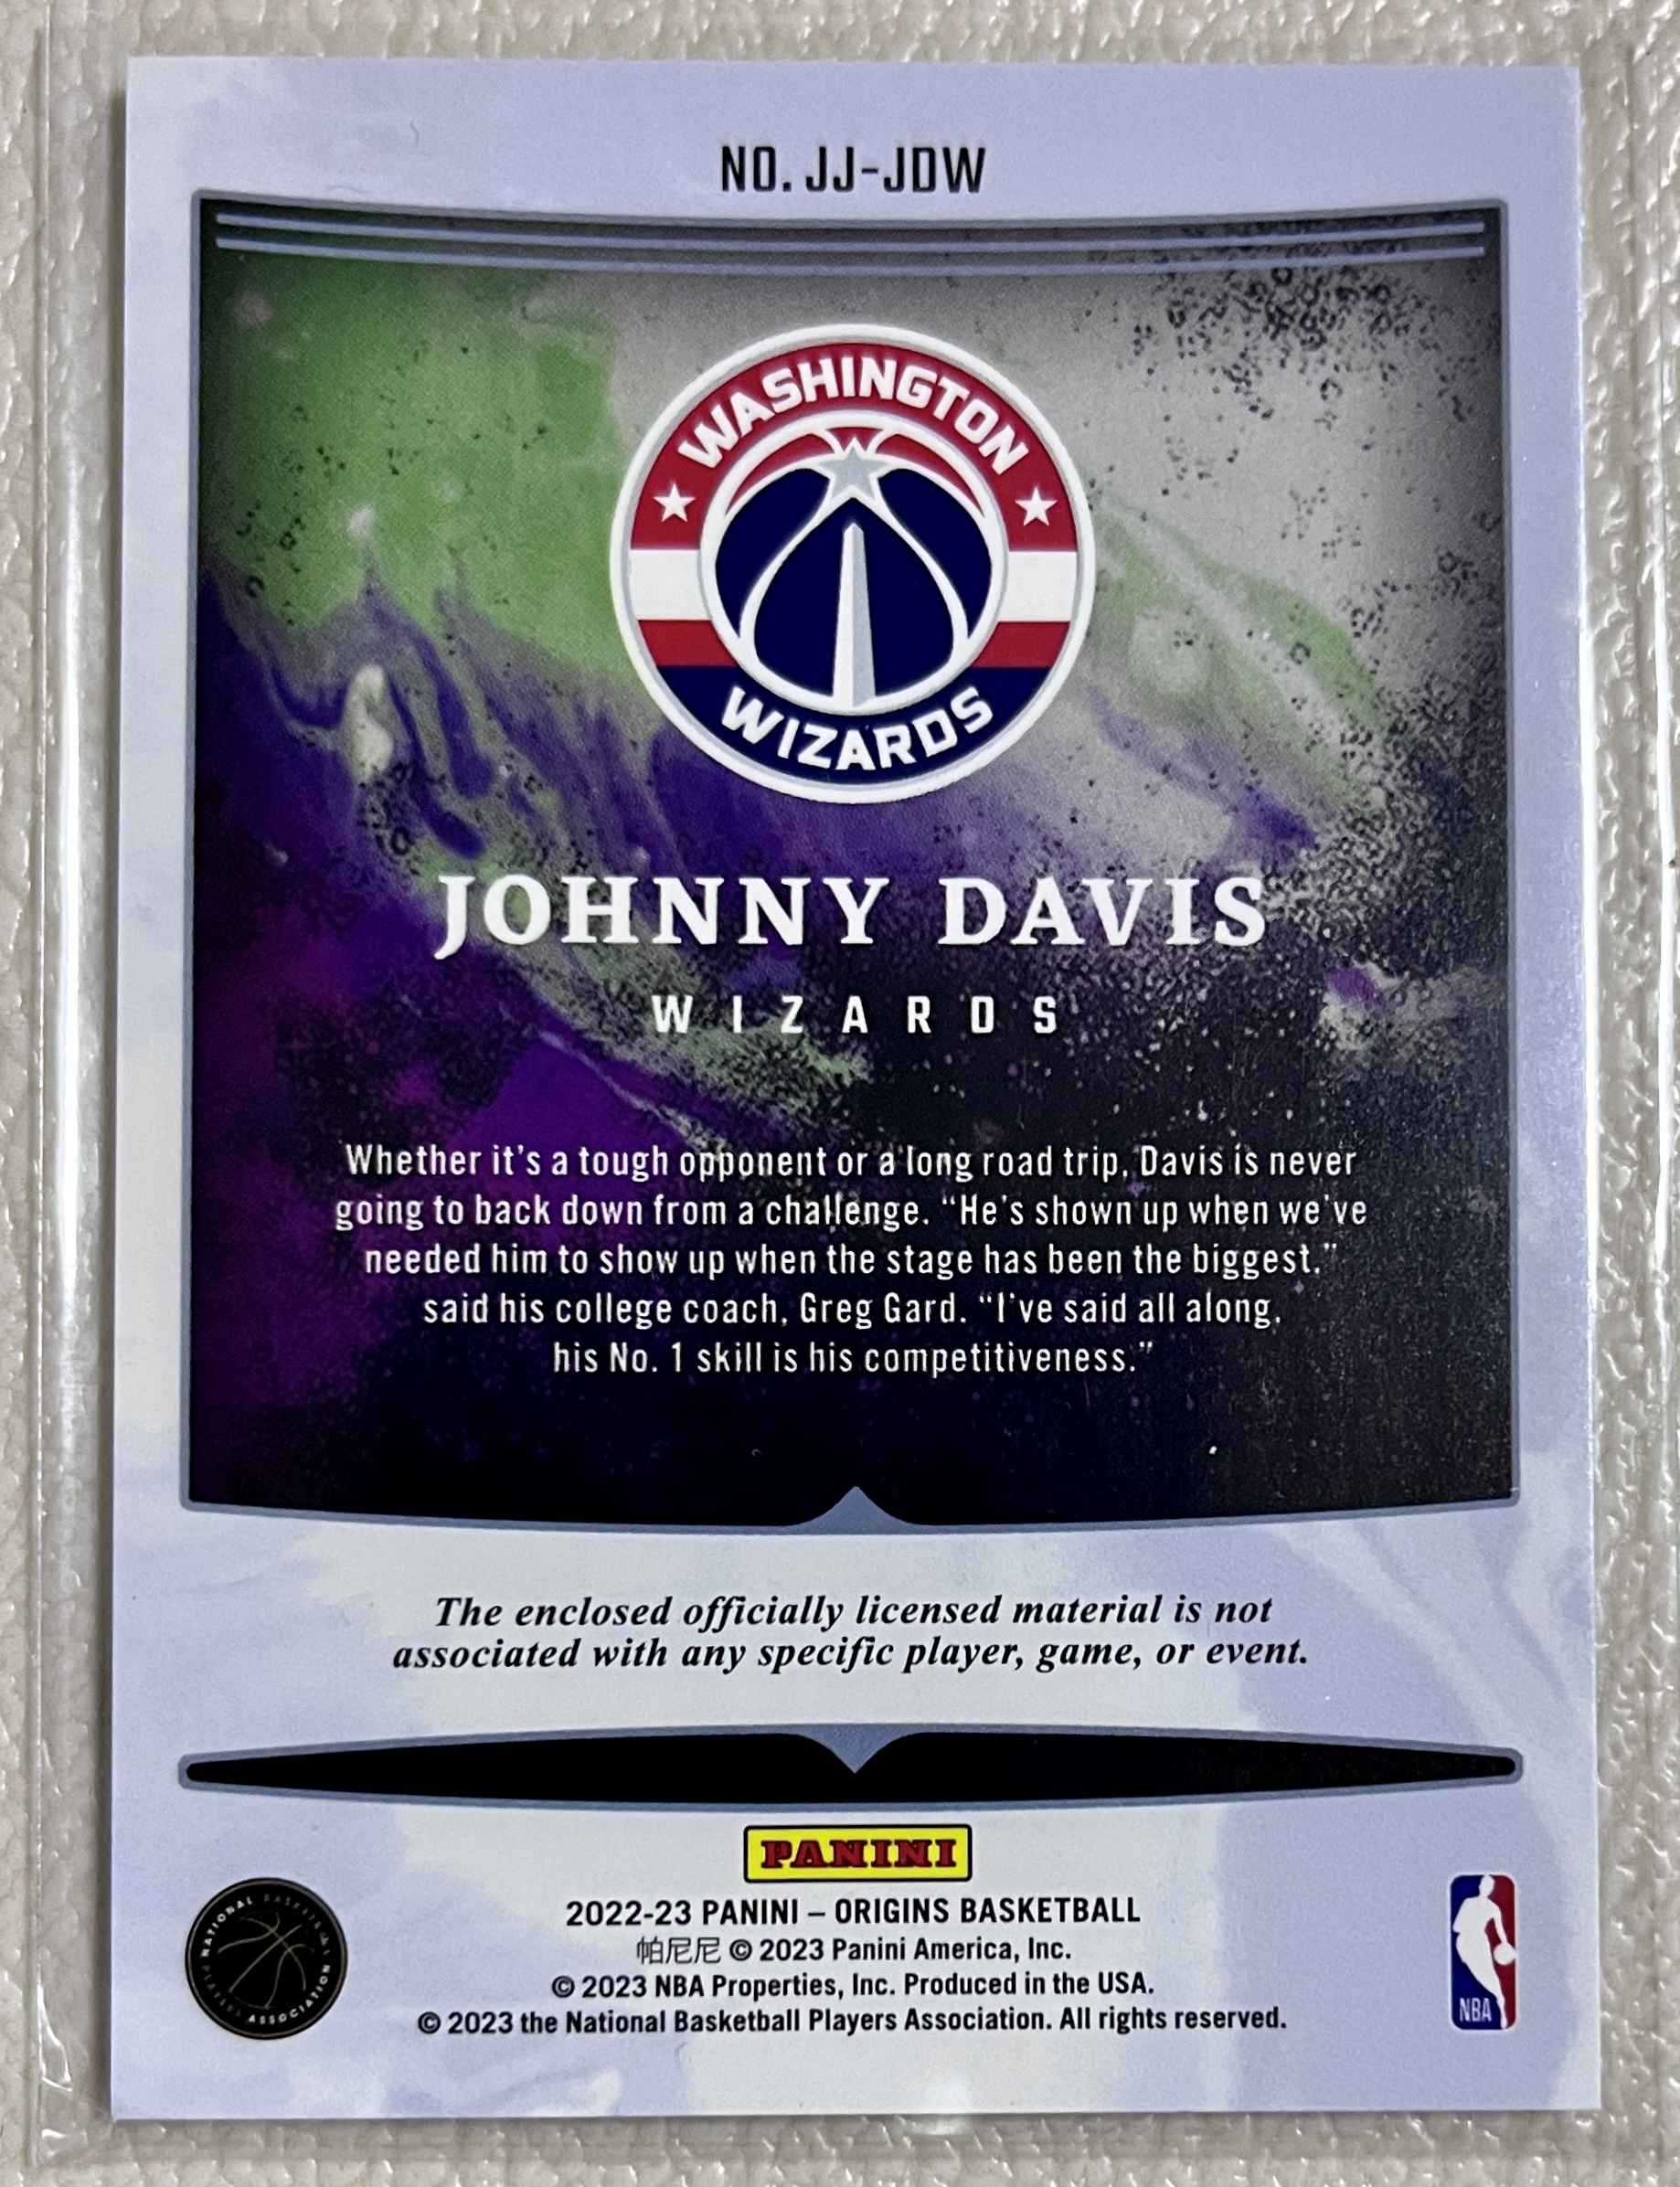 2022-23 Panini Origins Johnny Davis RC 【叶卓凡】帕尼尼球星卡 经典起源系列 物料厚卡 奇才队新秀 约翰尼·戴维斯 高大强壮的双能卫，最擅长的进攻方式是突破上篮